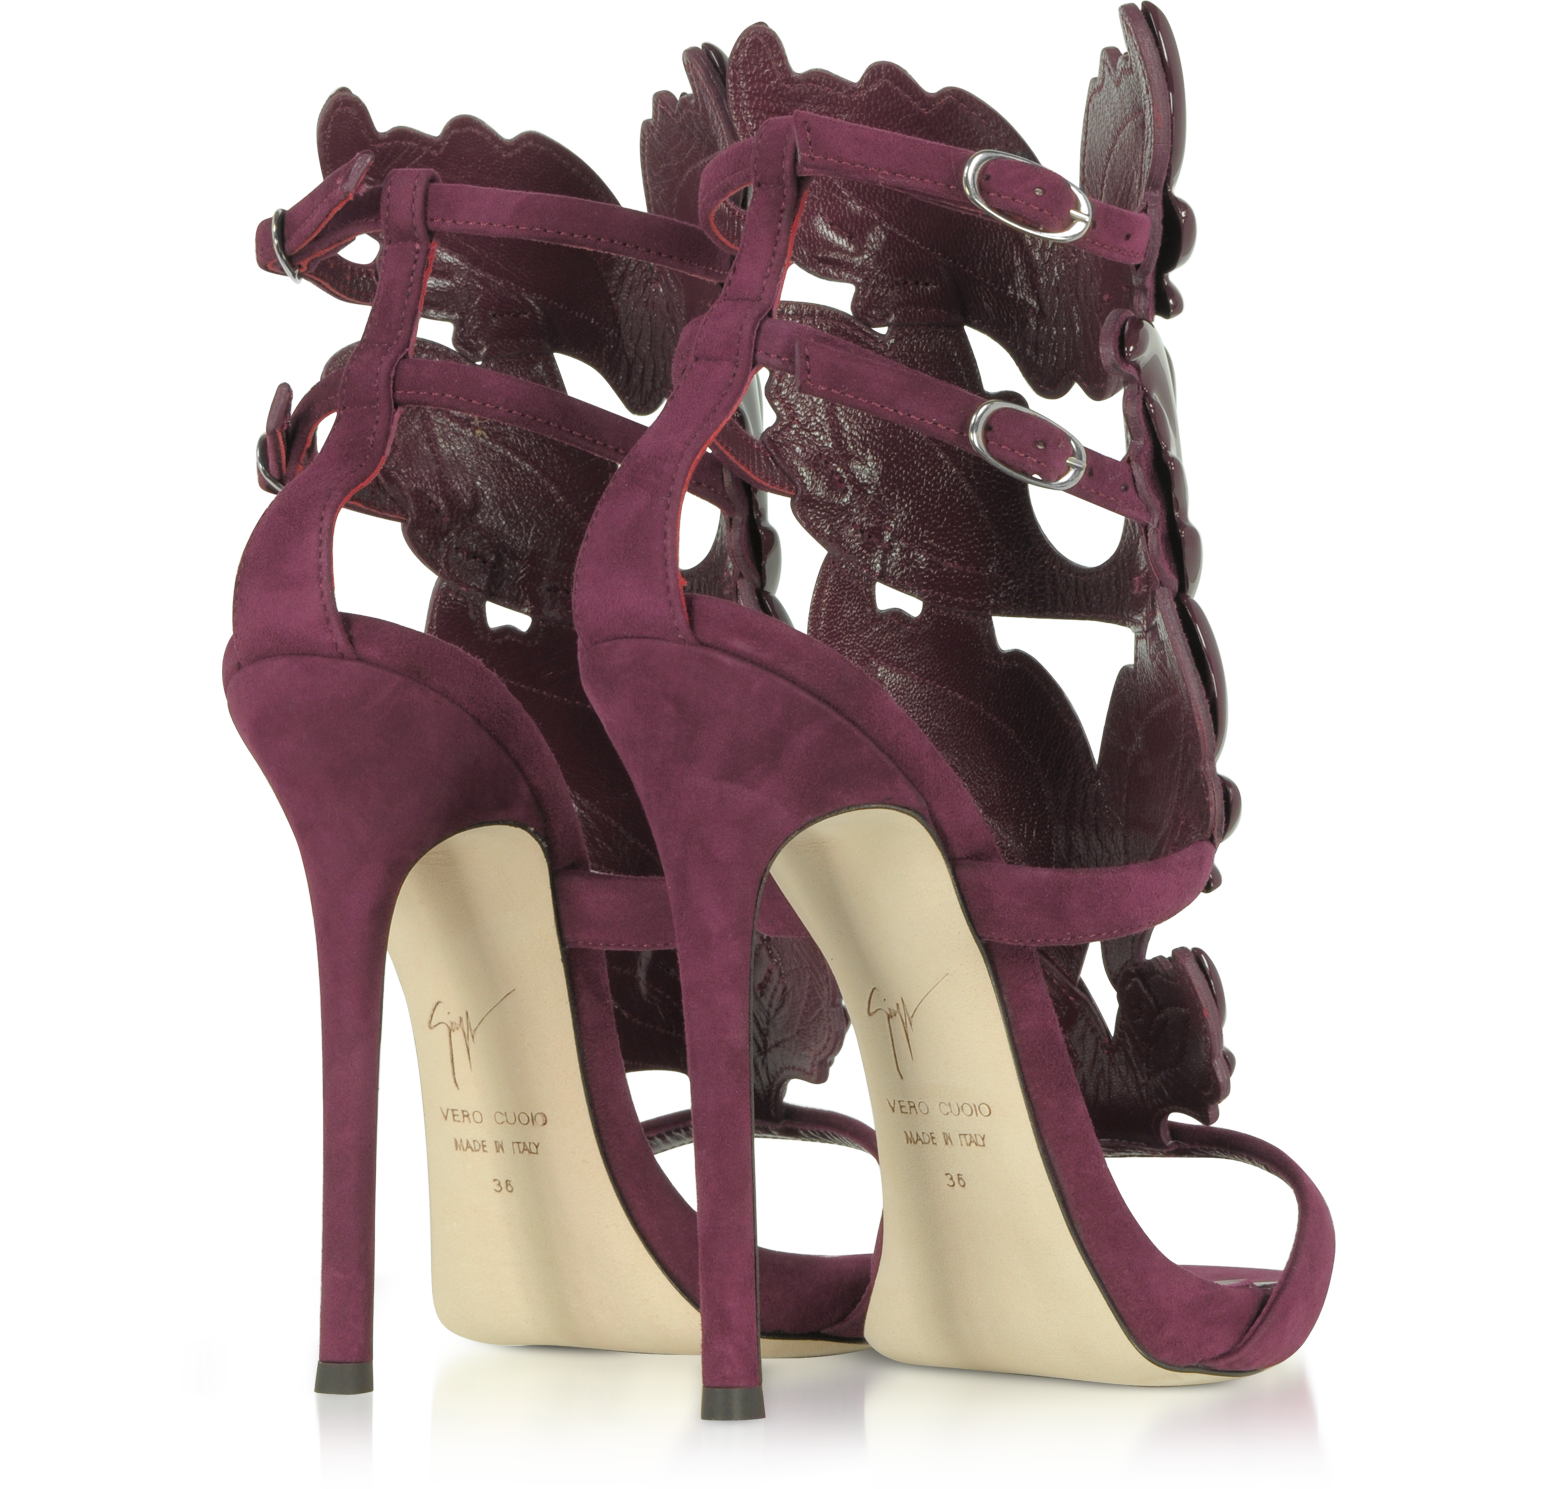 burgundy giuseppe heels